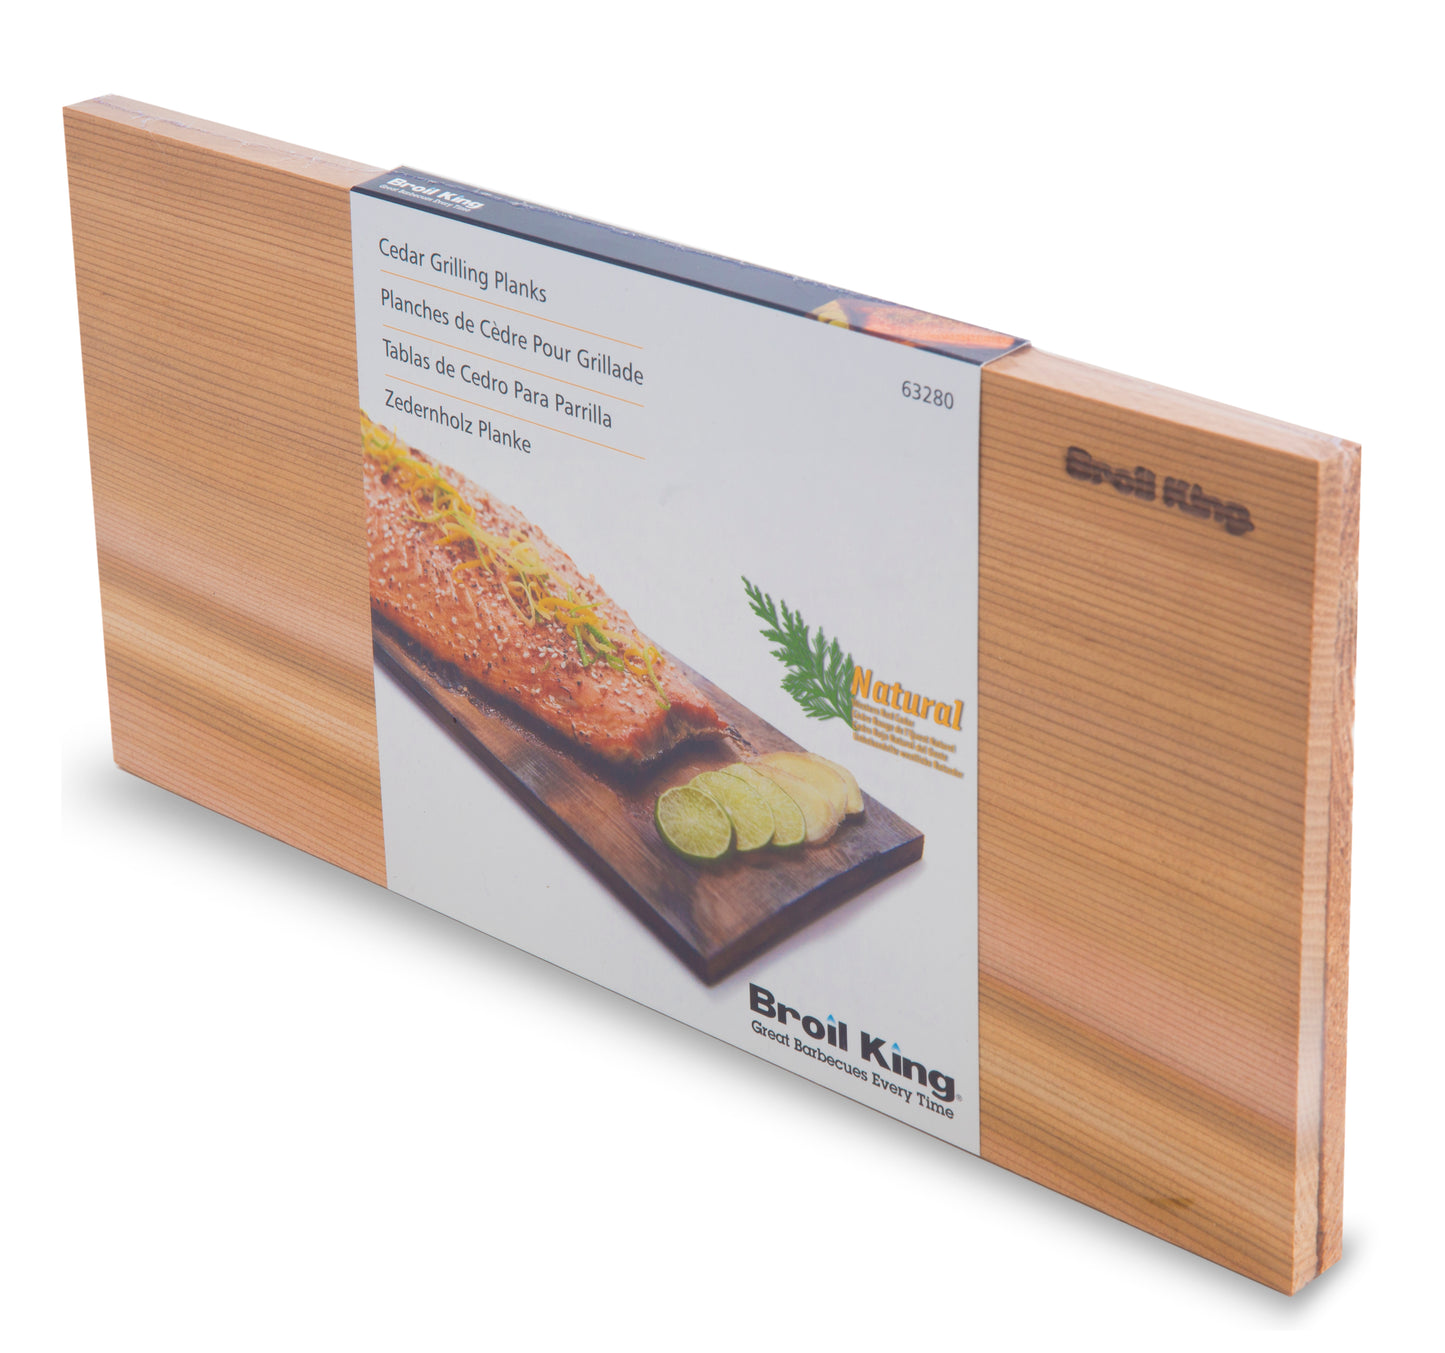 Broil King Cedar Grilling Planks